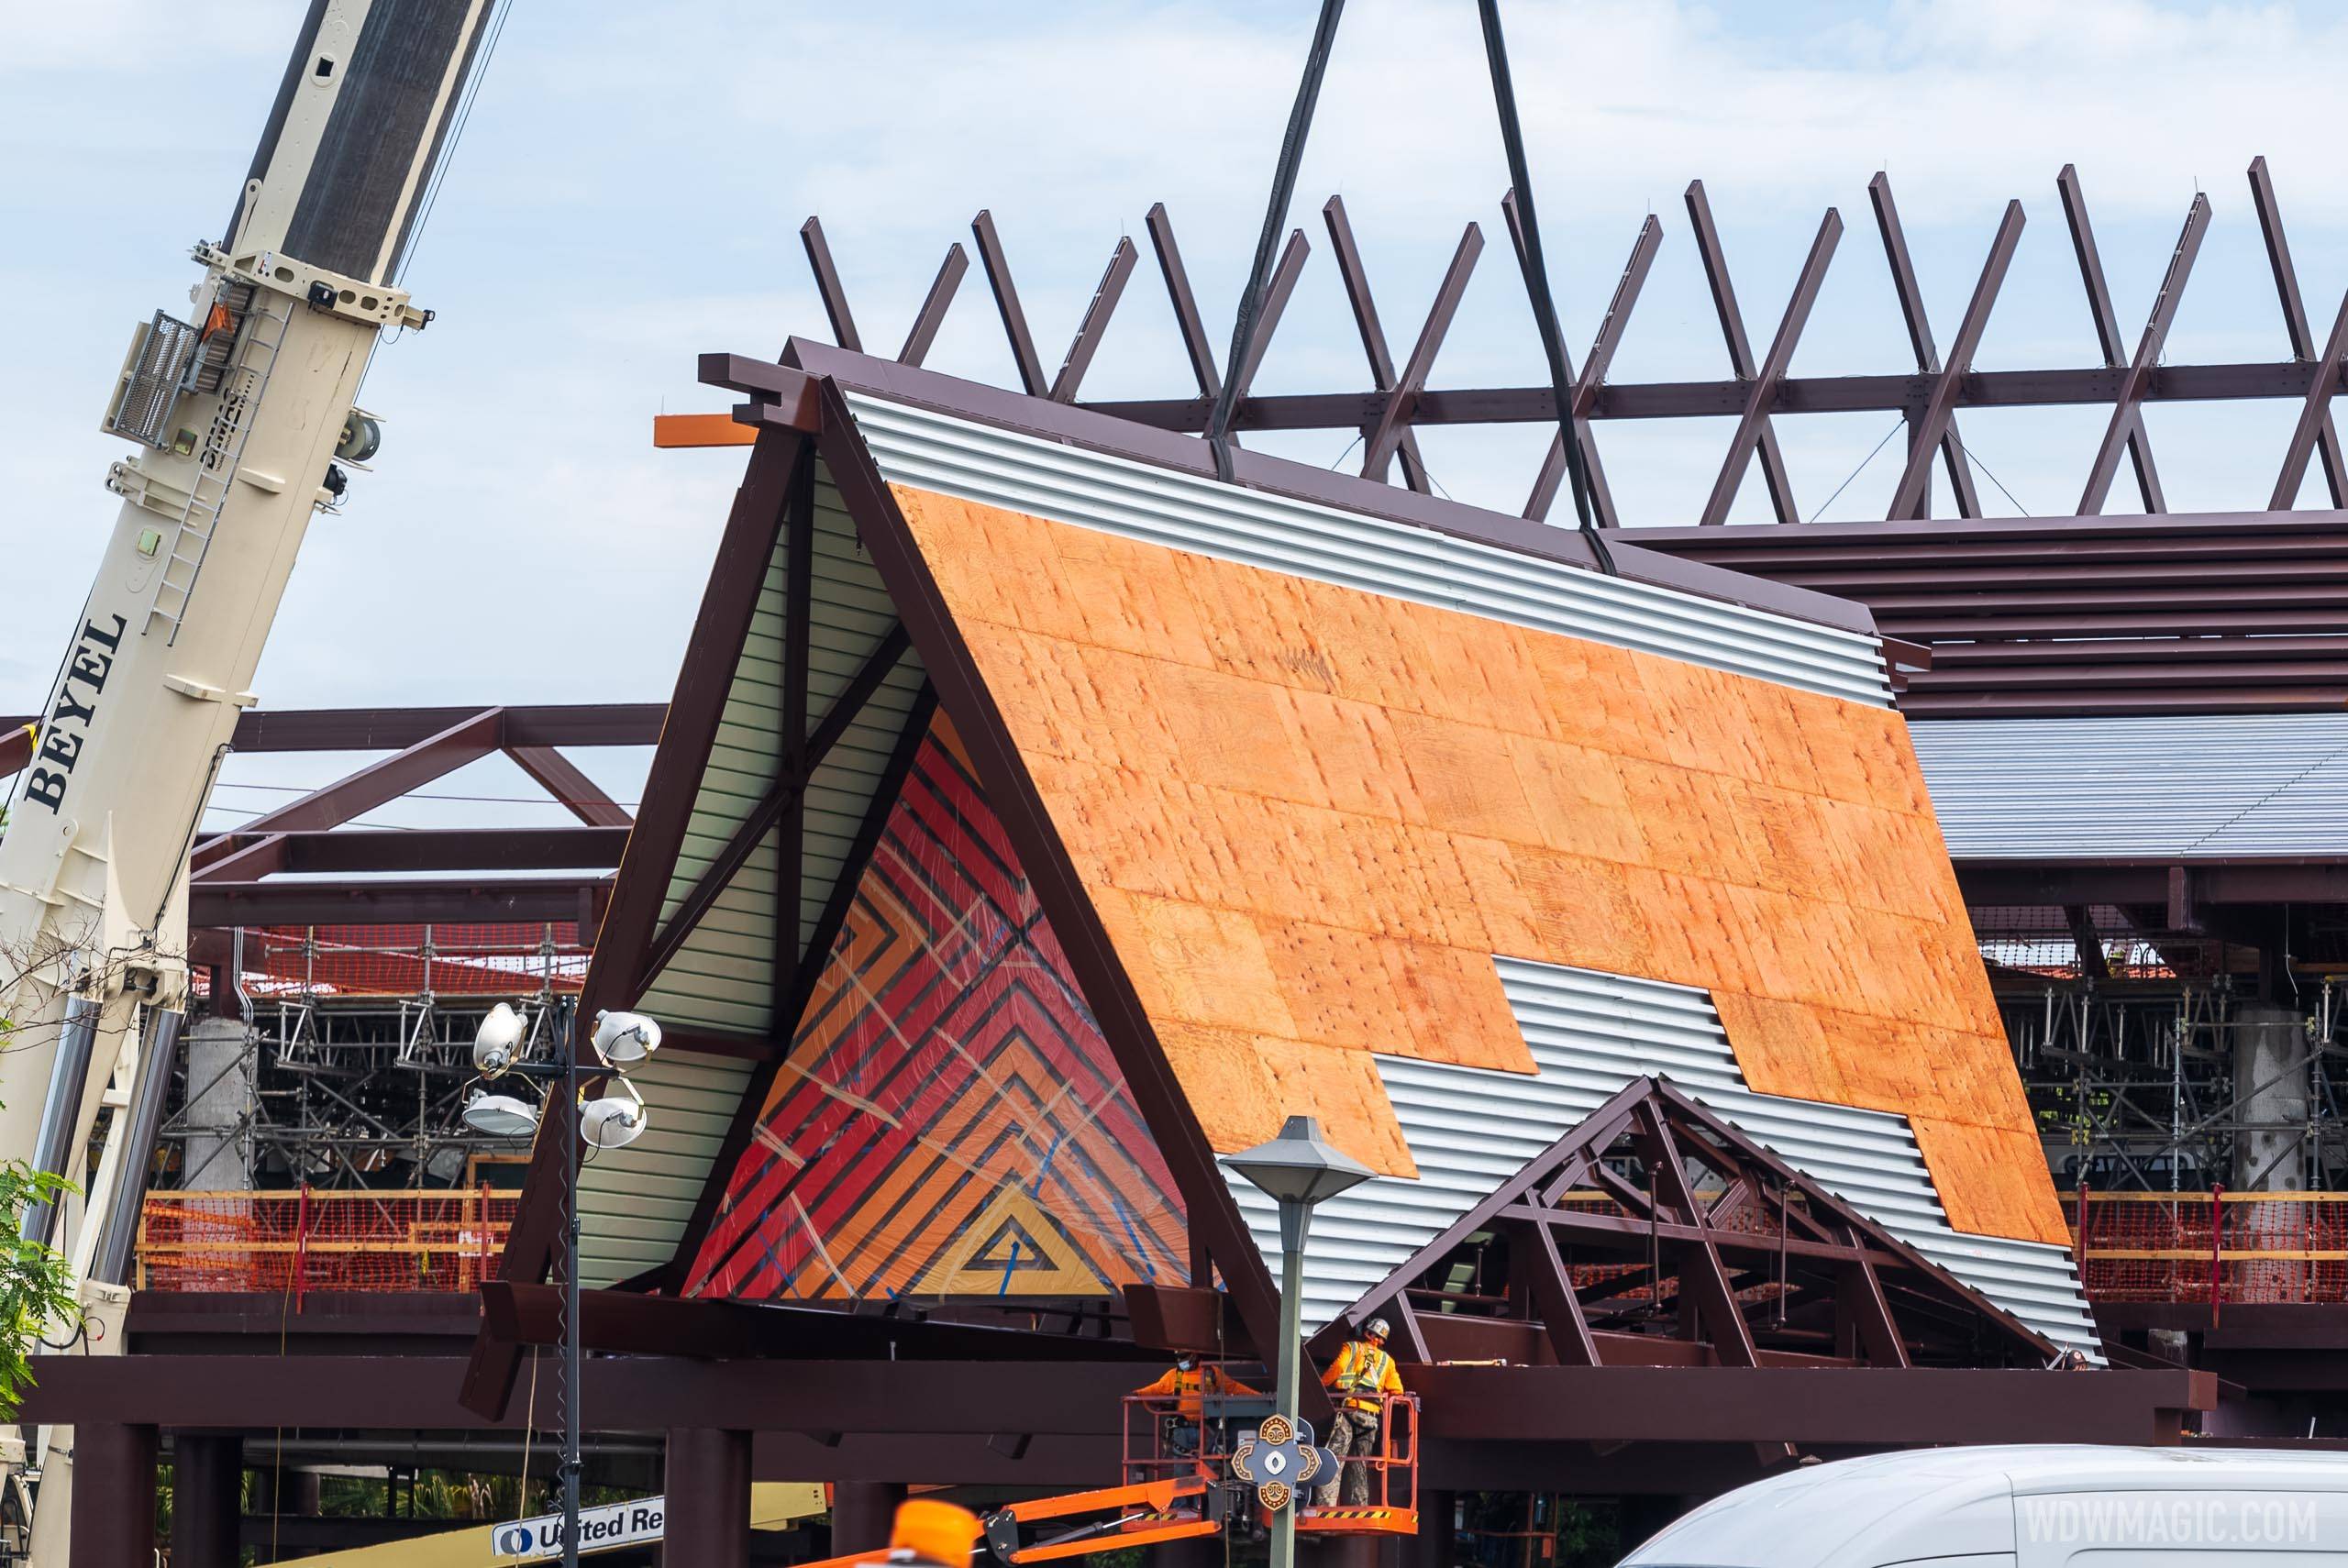 Porte-cochere installation at Disney's Polynesian Village Resort - June 14 2021